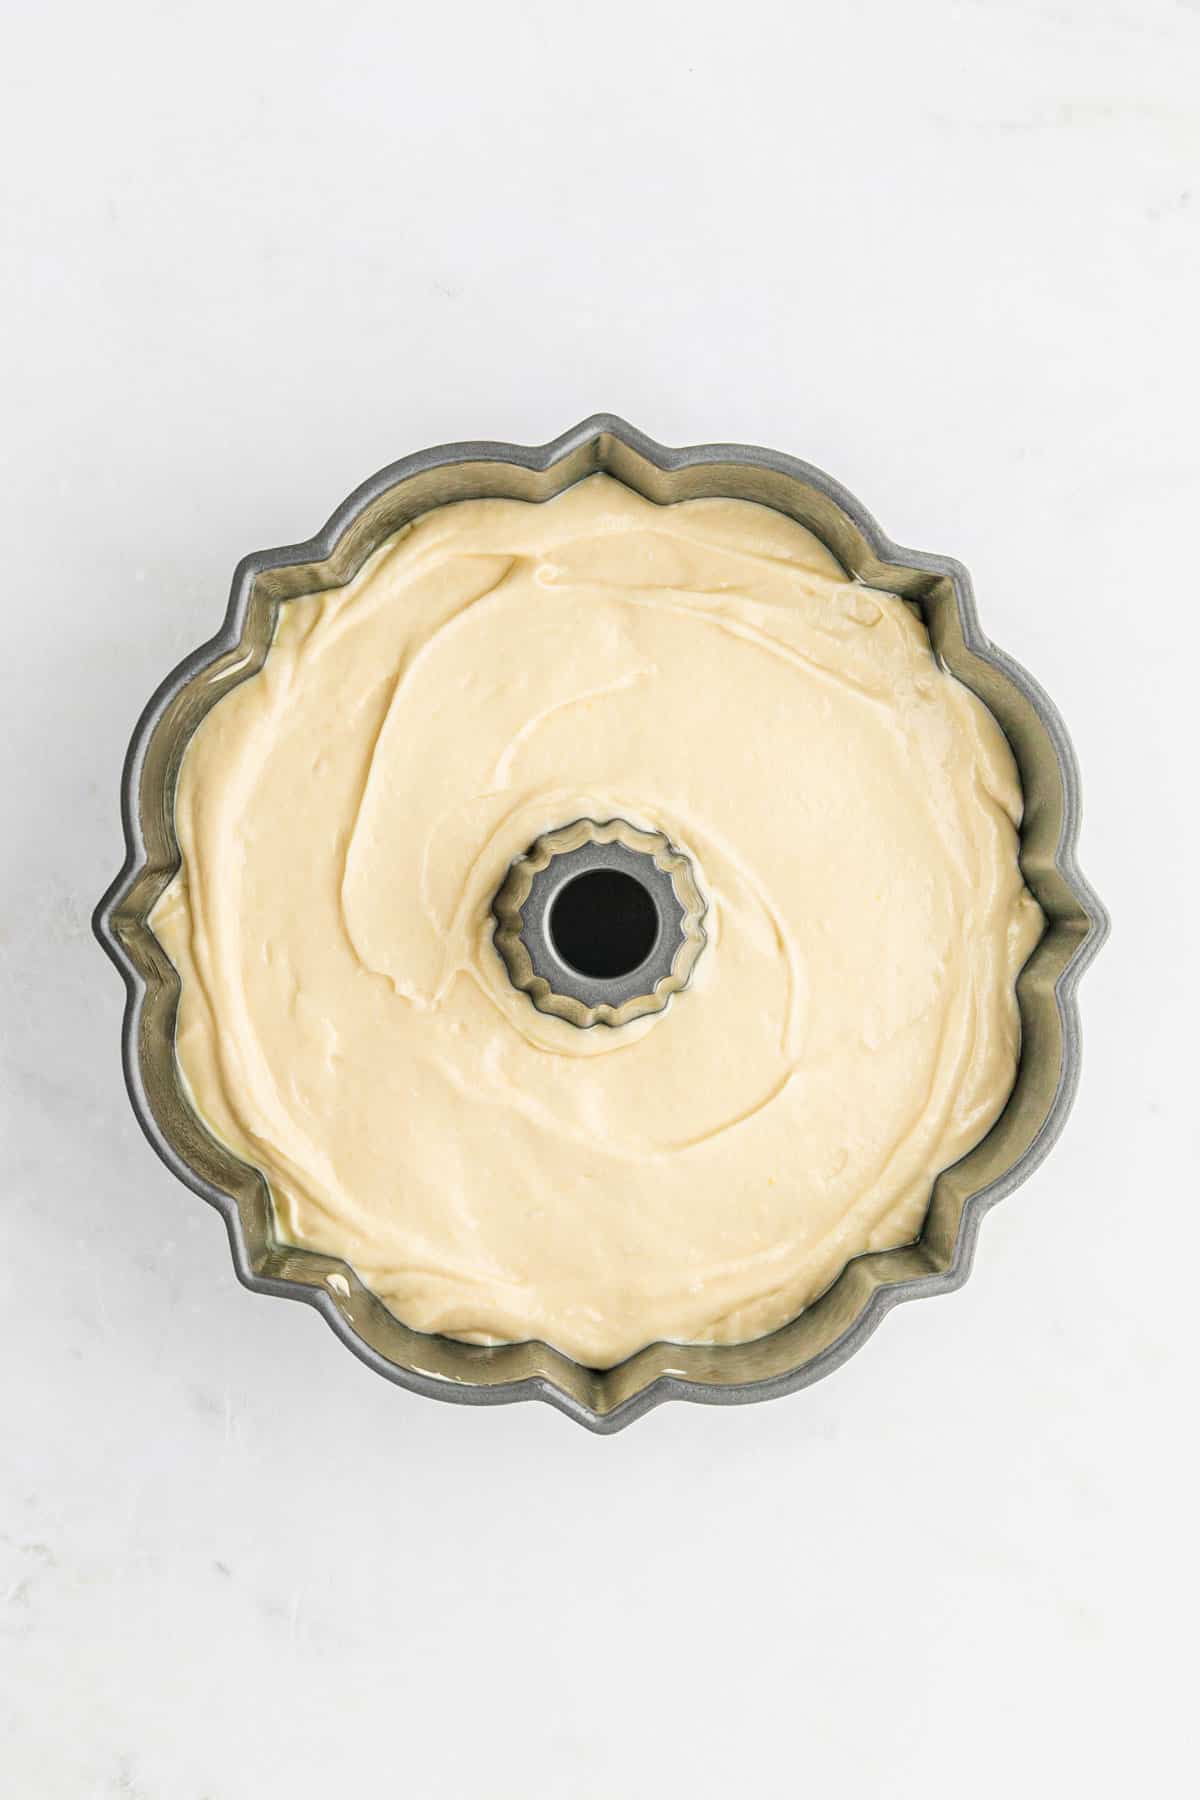 Sour cream pound cake batter poured into a bundt pan.